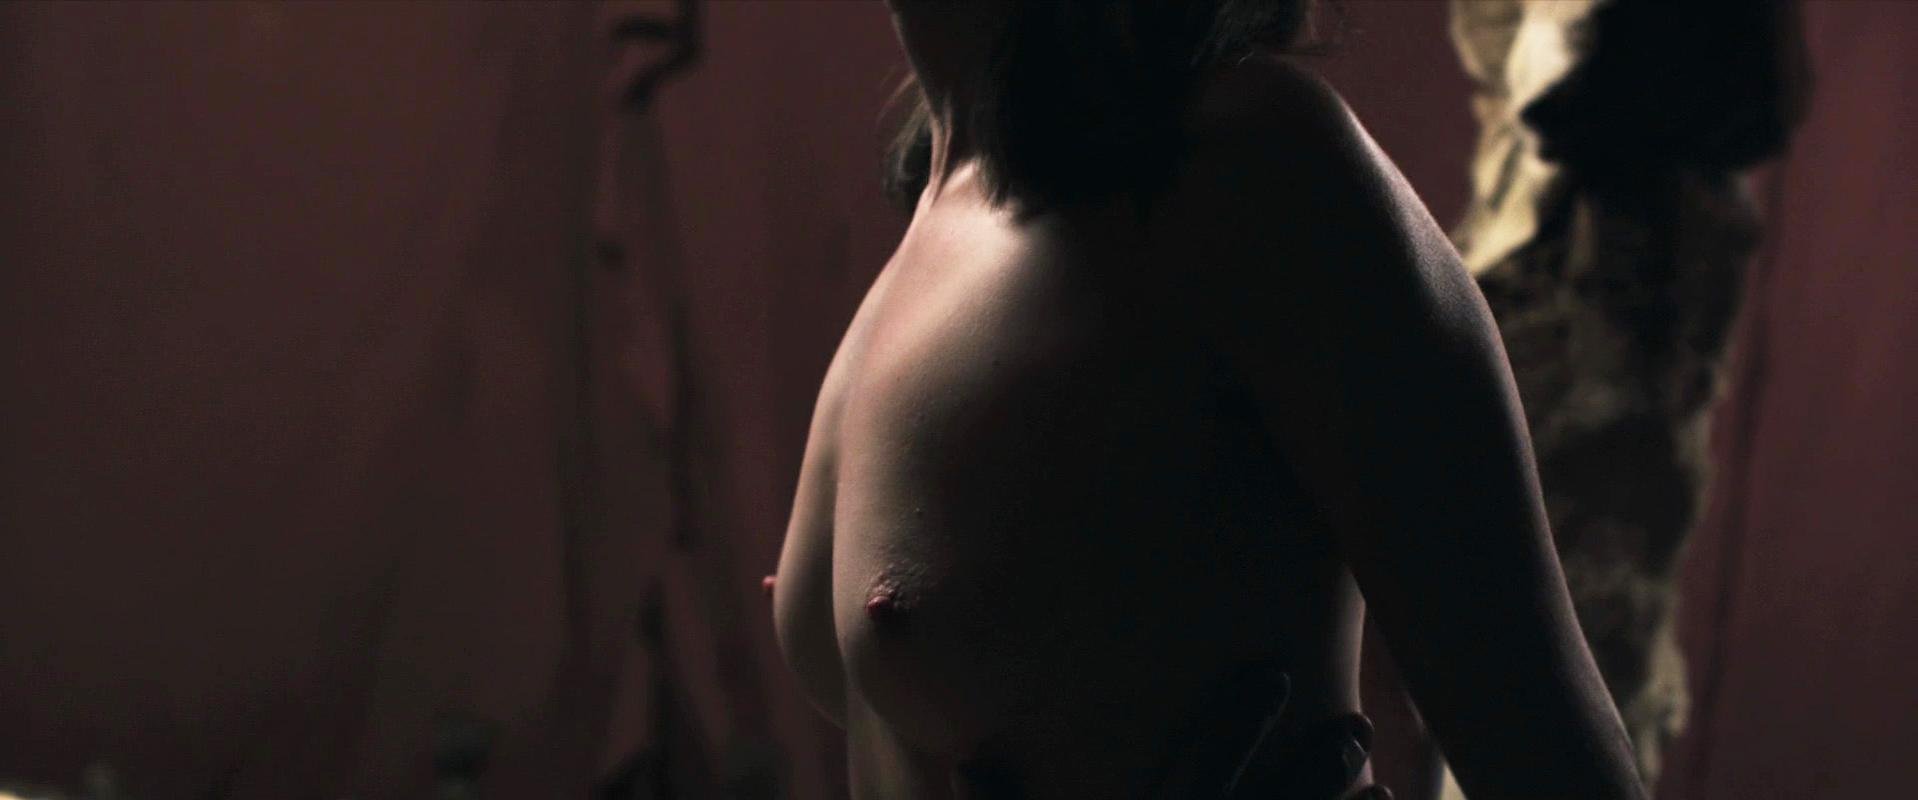 Ivy Corbin nude - Morning Star (2014)